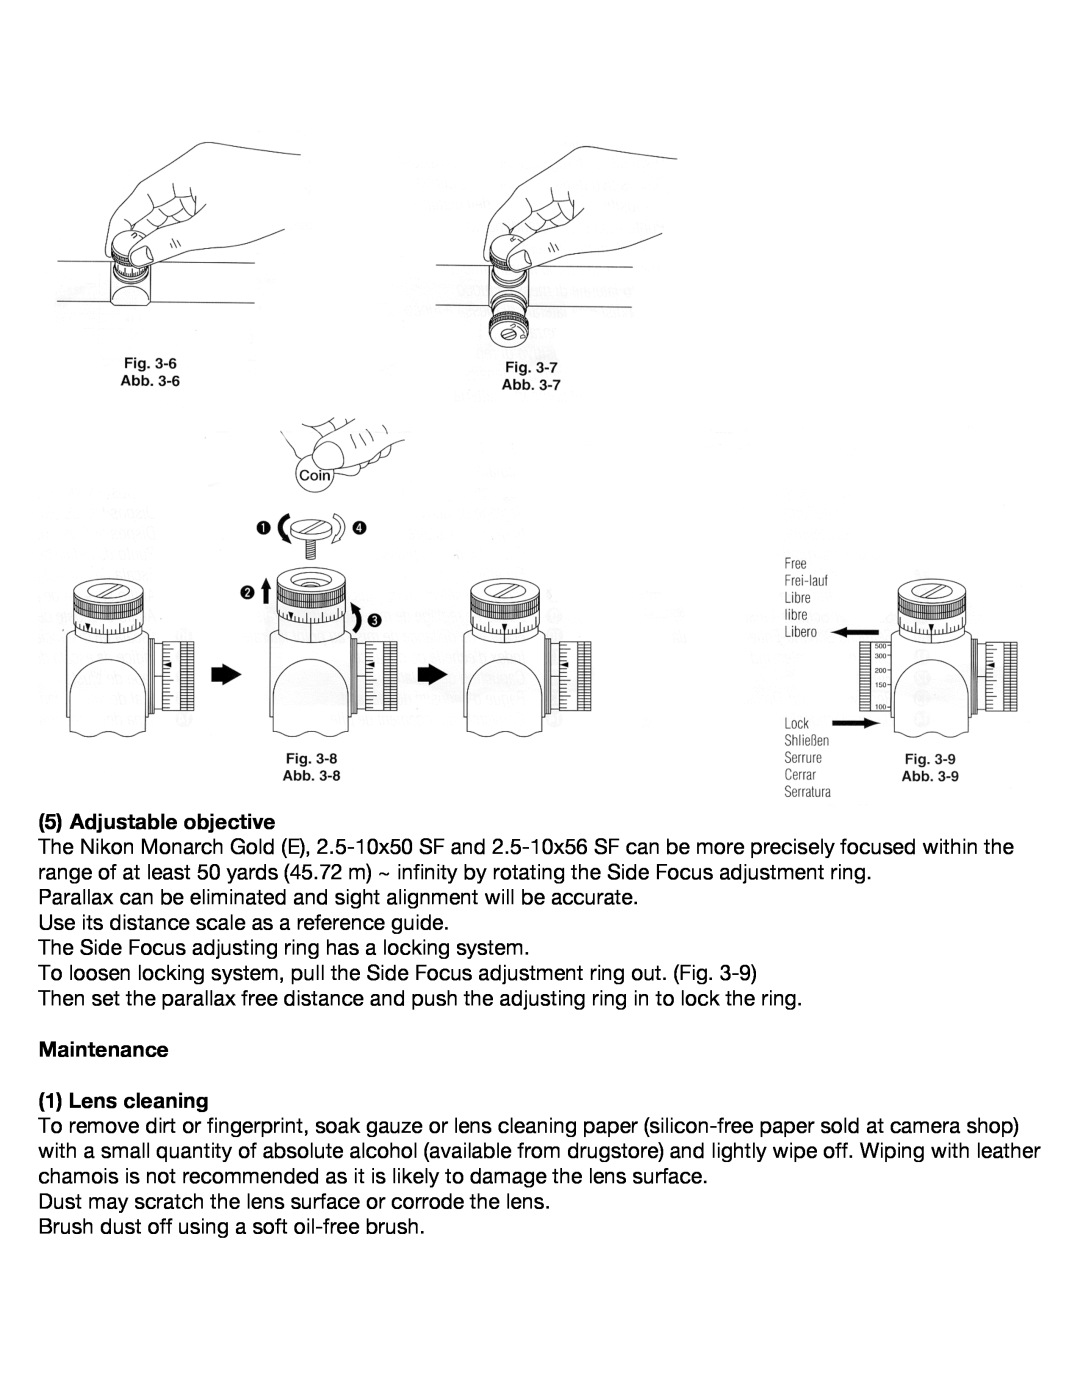 Nikon Monarch Gold (E) instruction manual Adjustable objective, Maintenance 1 Lens cleaning 